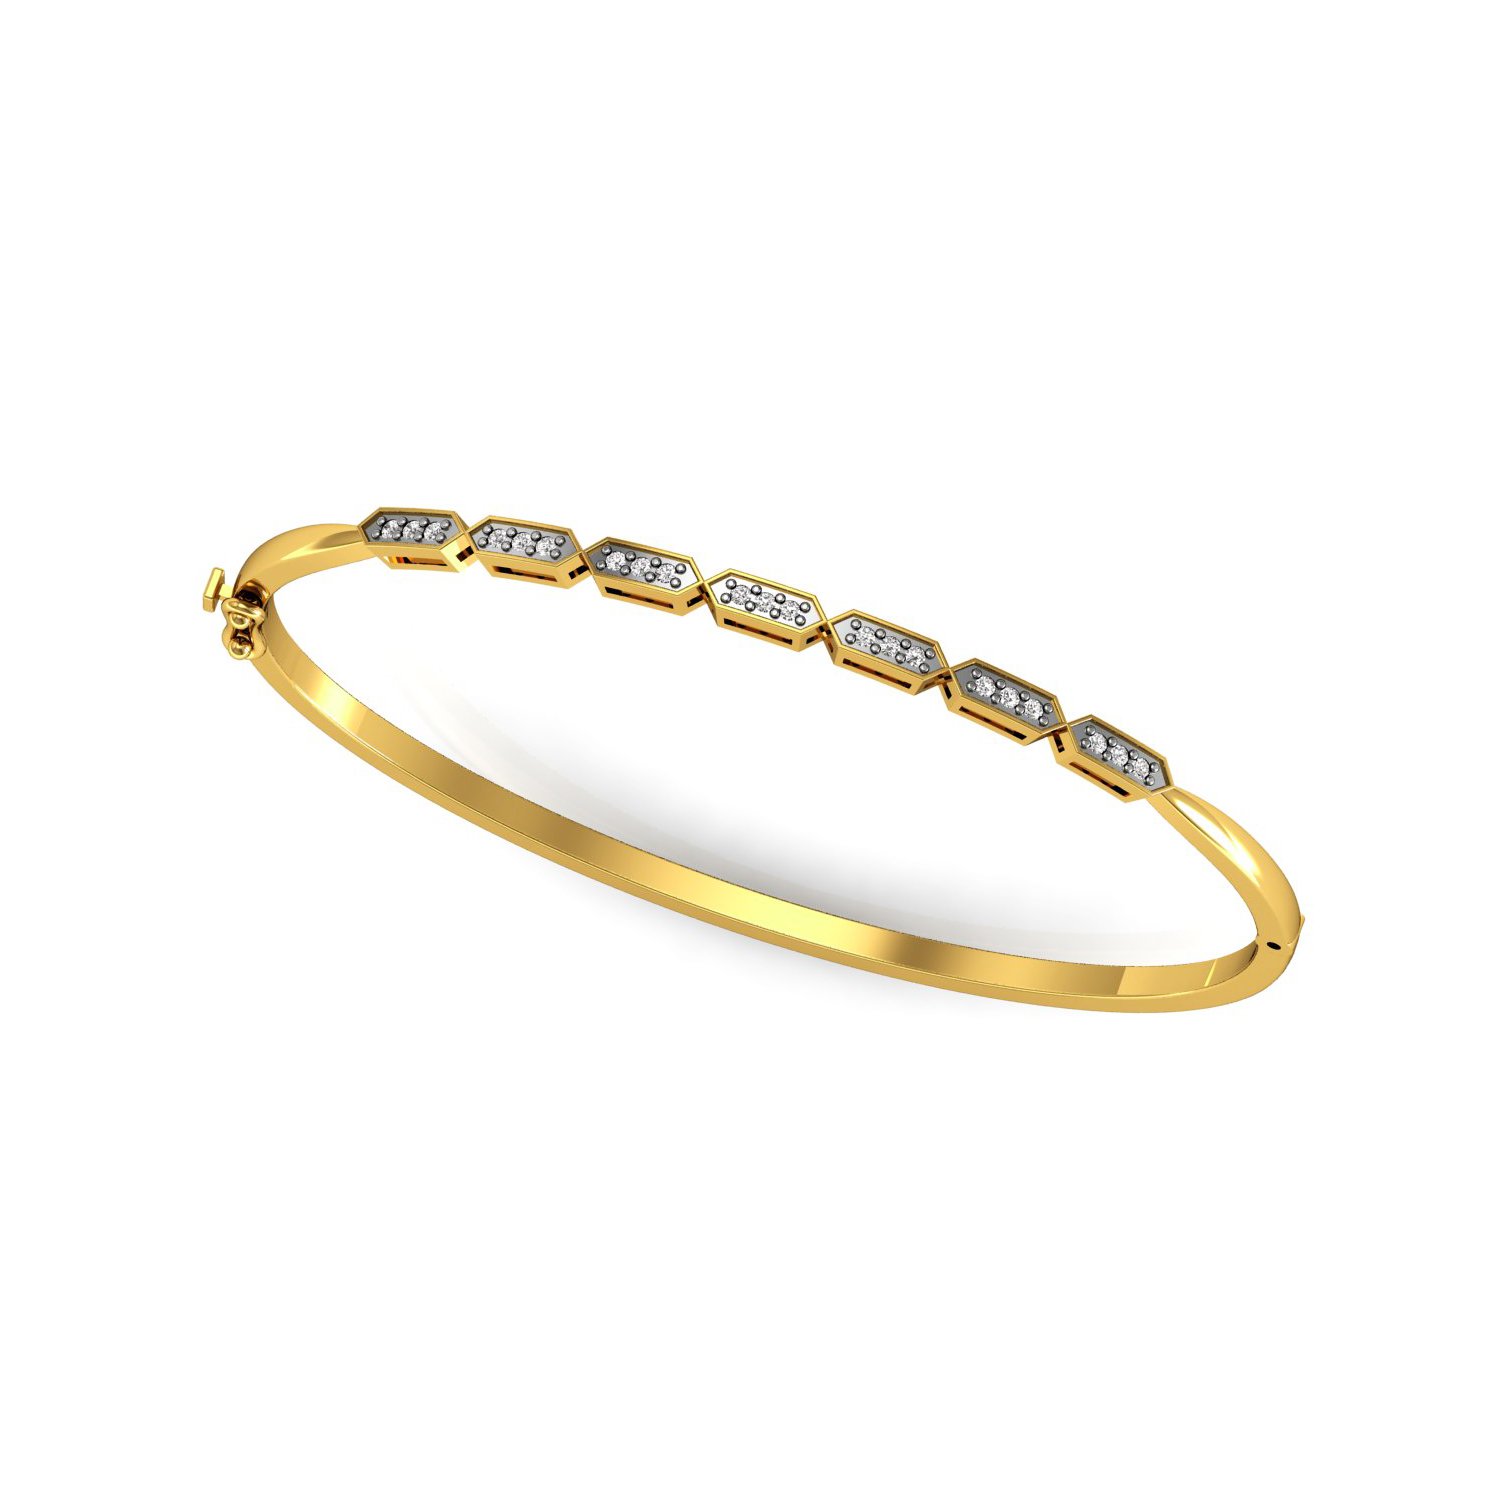 Natural diamond openable gold sleek bangle bracelet